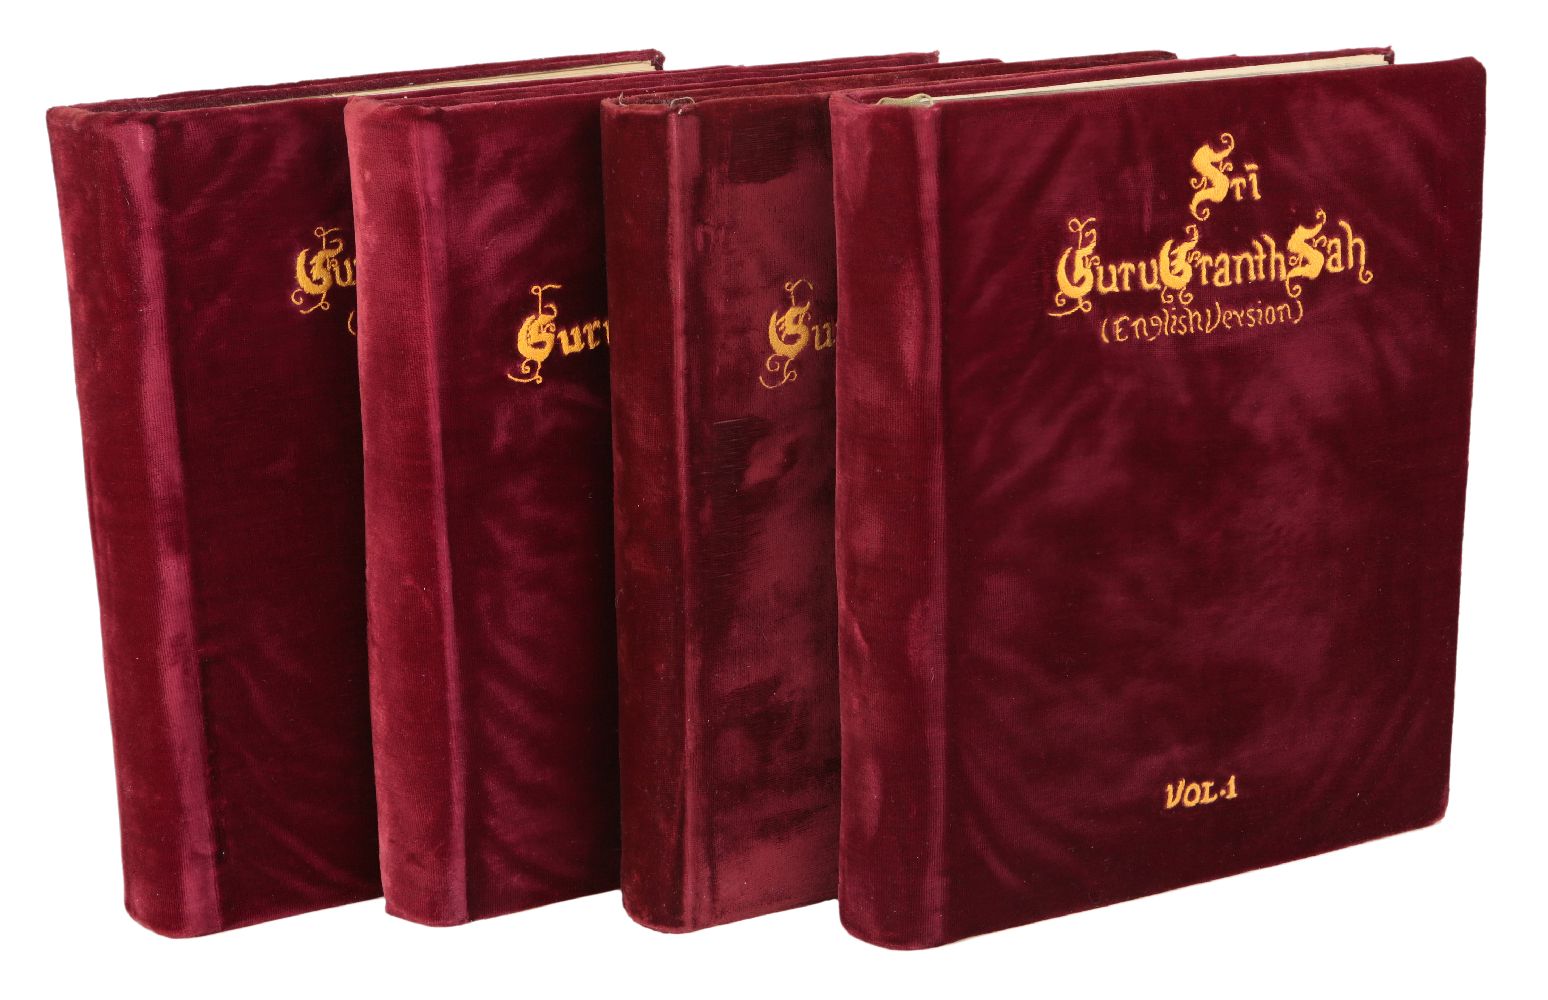 The Bhai Gopal Singh English translation of the Siri Guru-Granth Sahib, translated and annotated